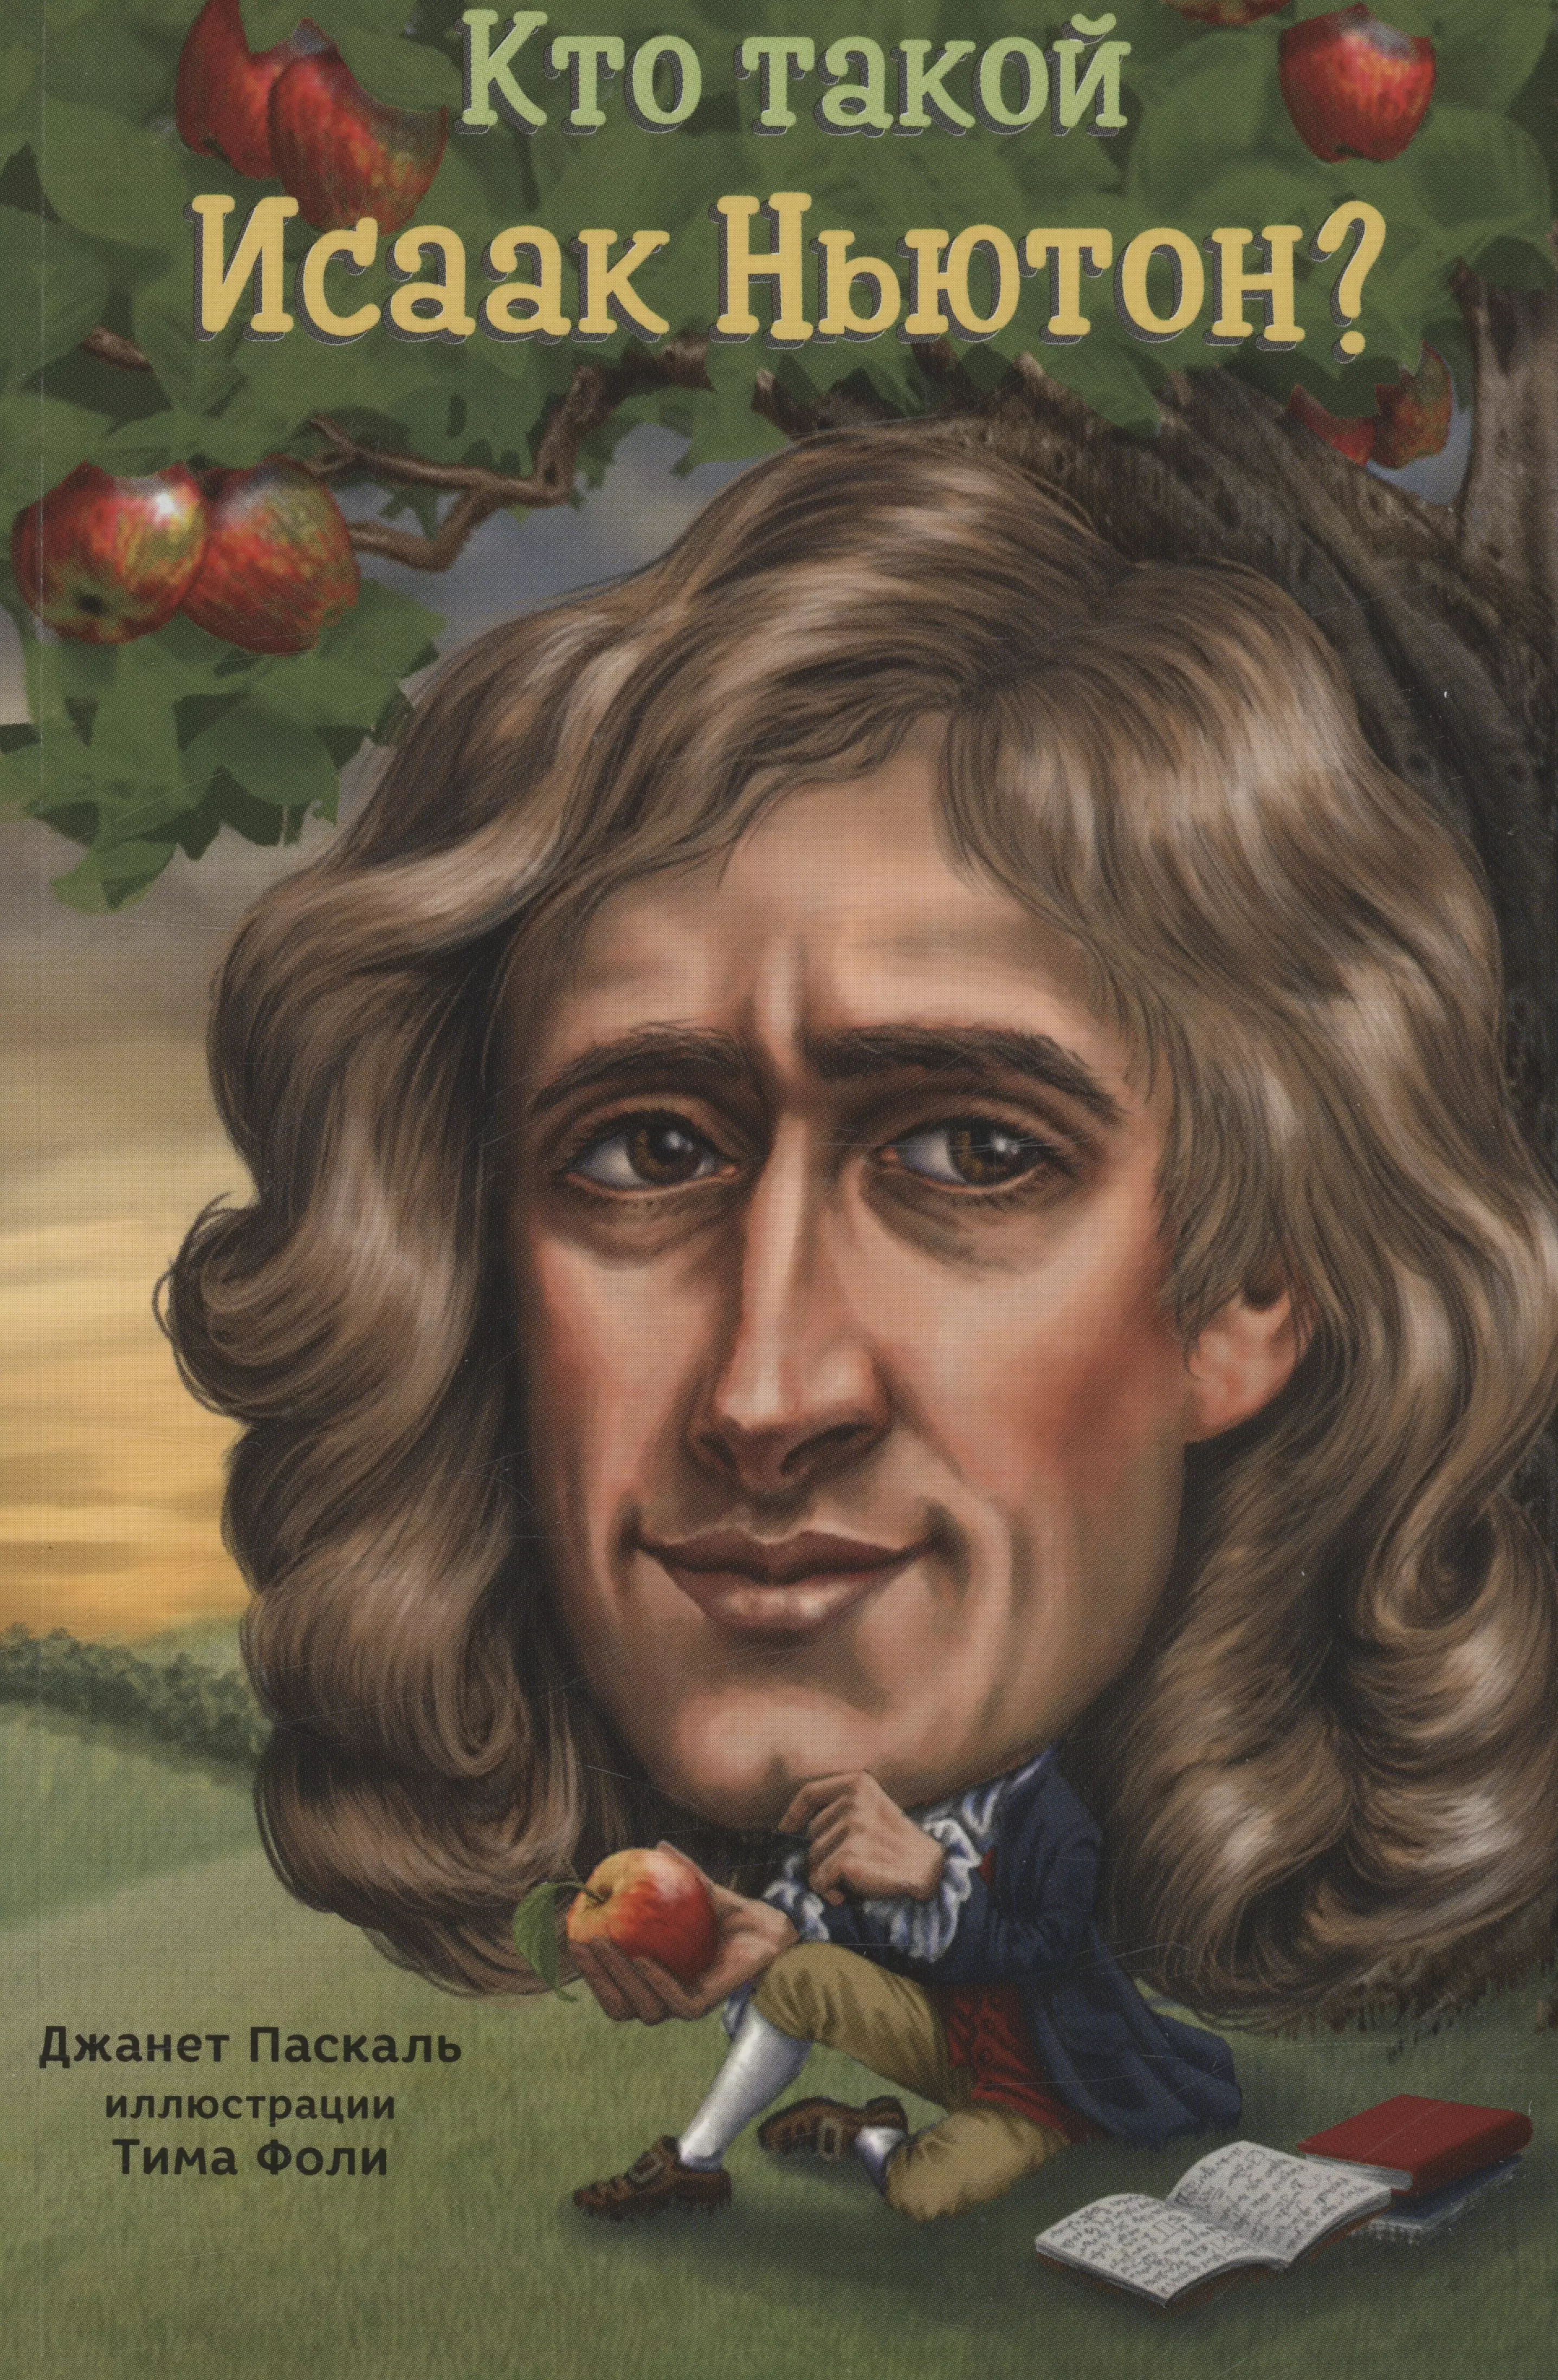 Кто такой Исаак Ньютон паскаль д б кто такой исаак ньютон